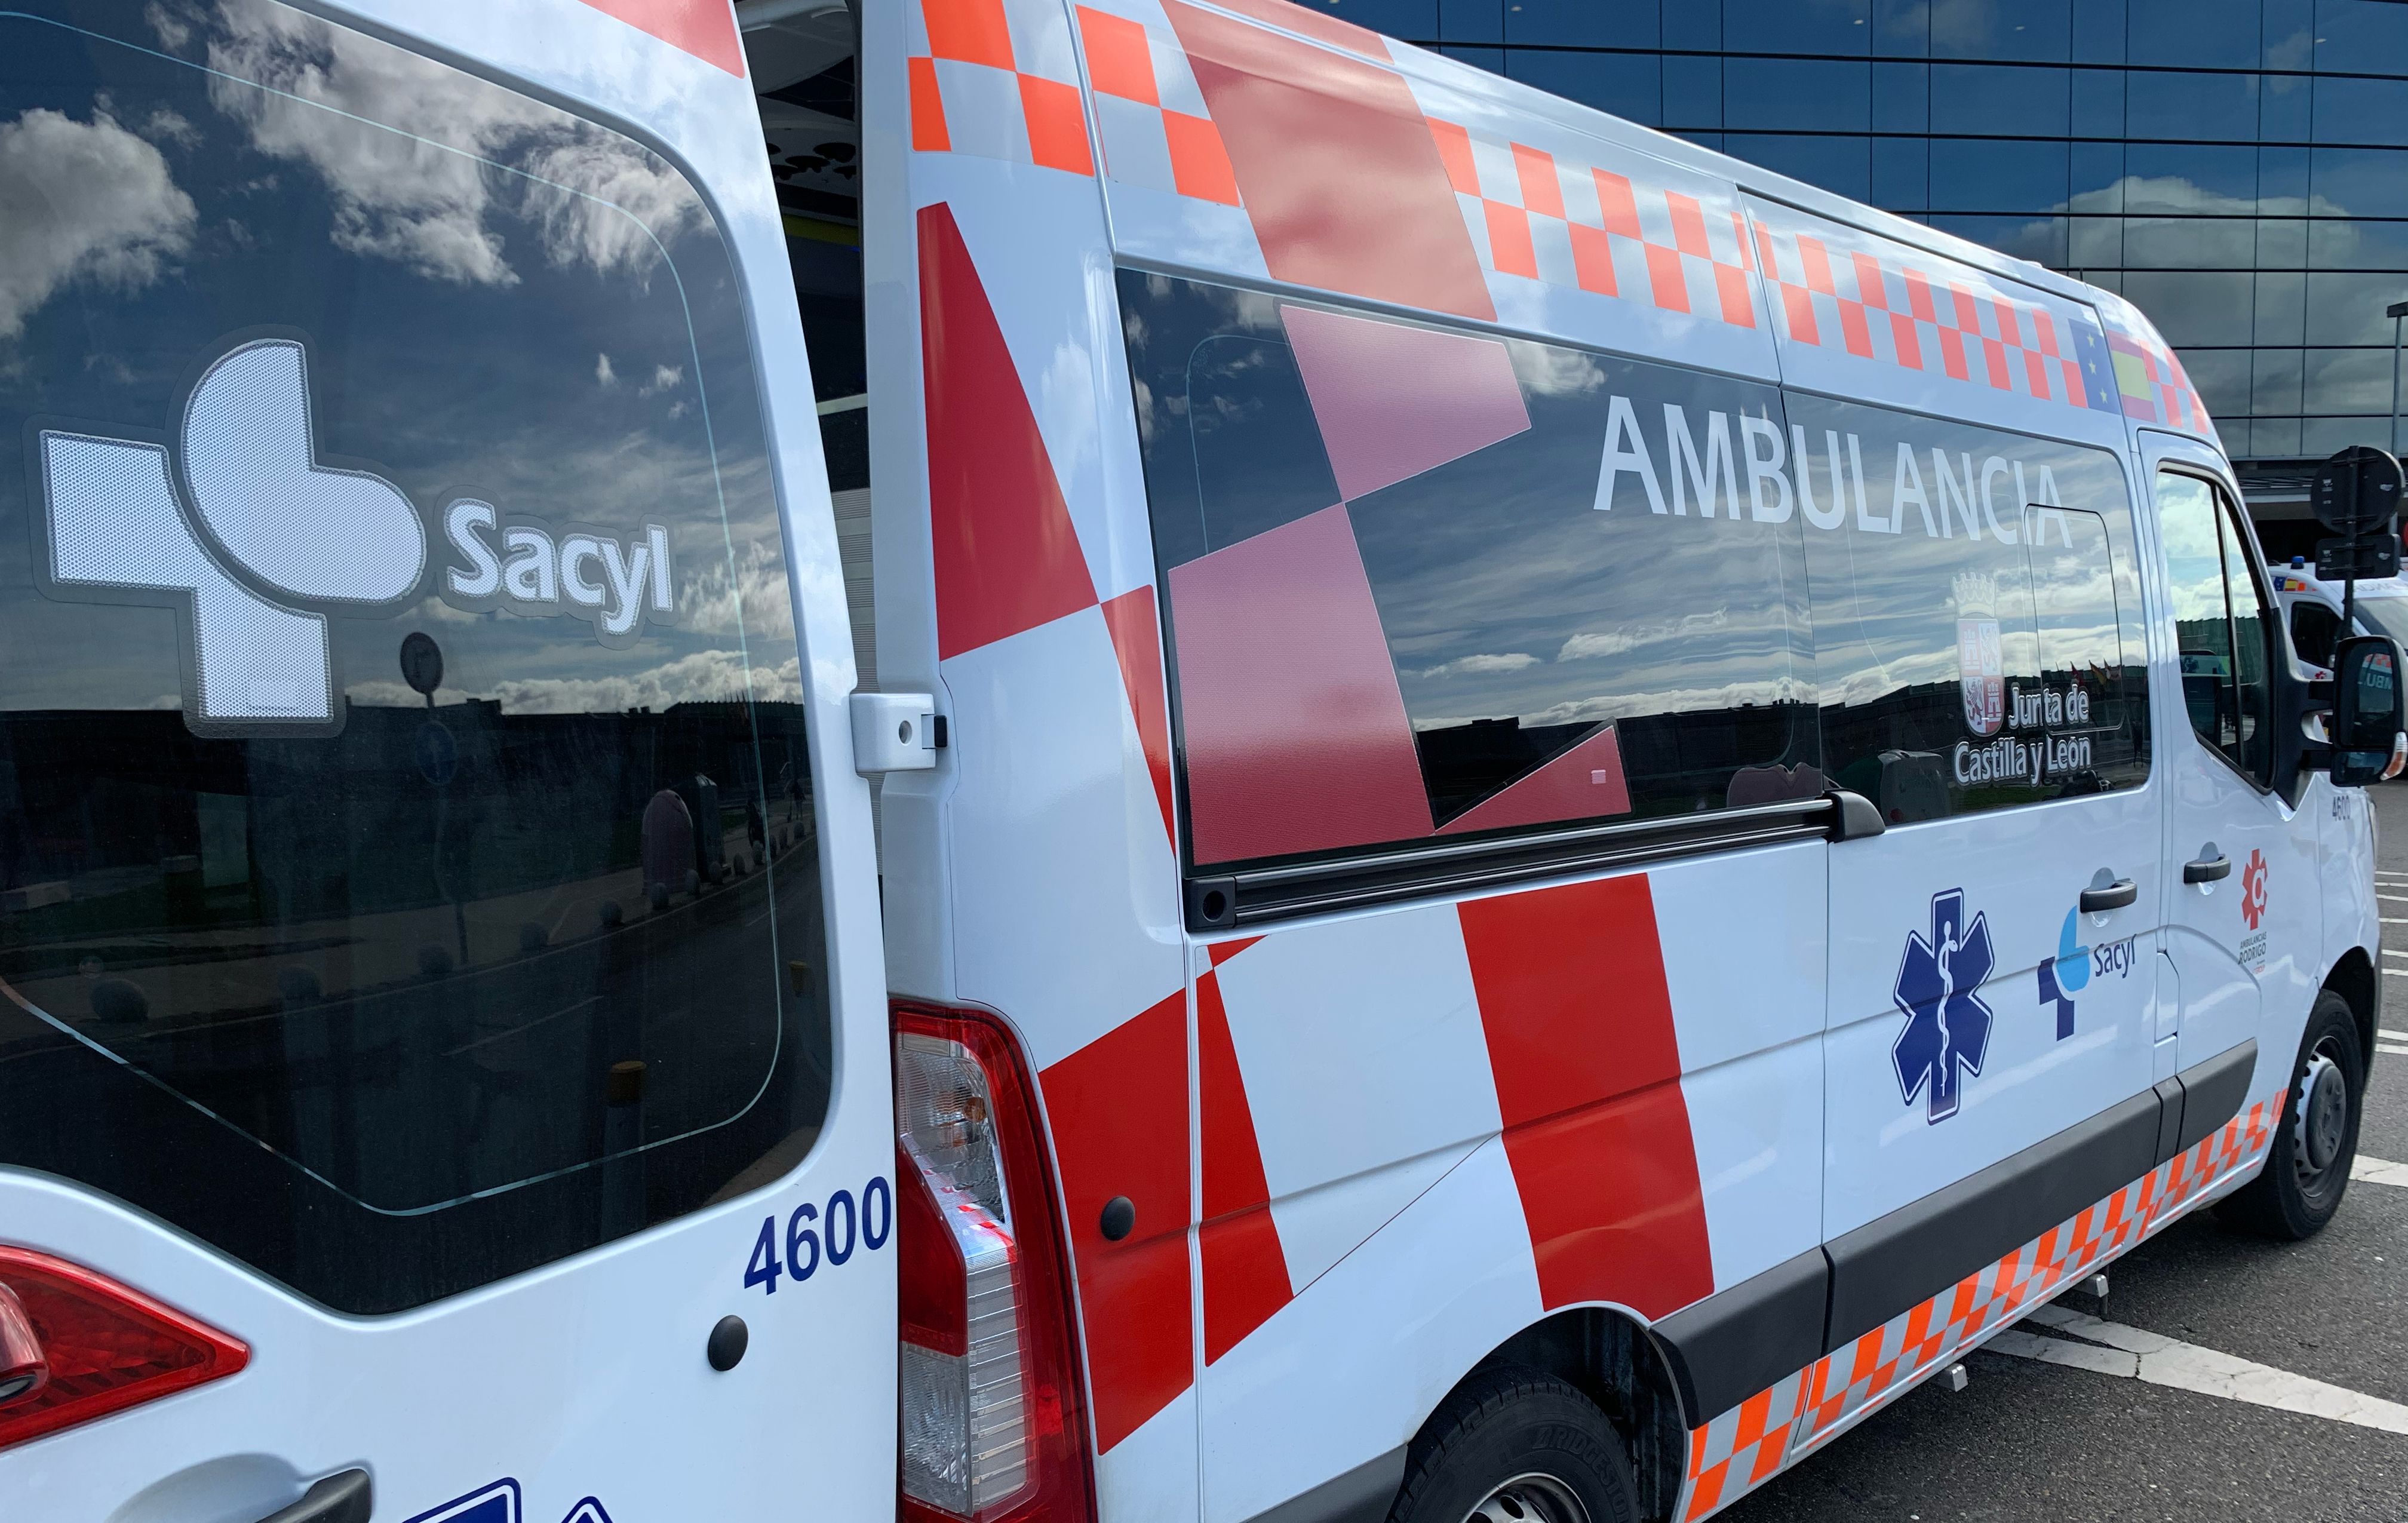 Ambulancia en el Hospital de León